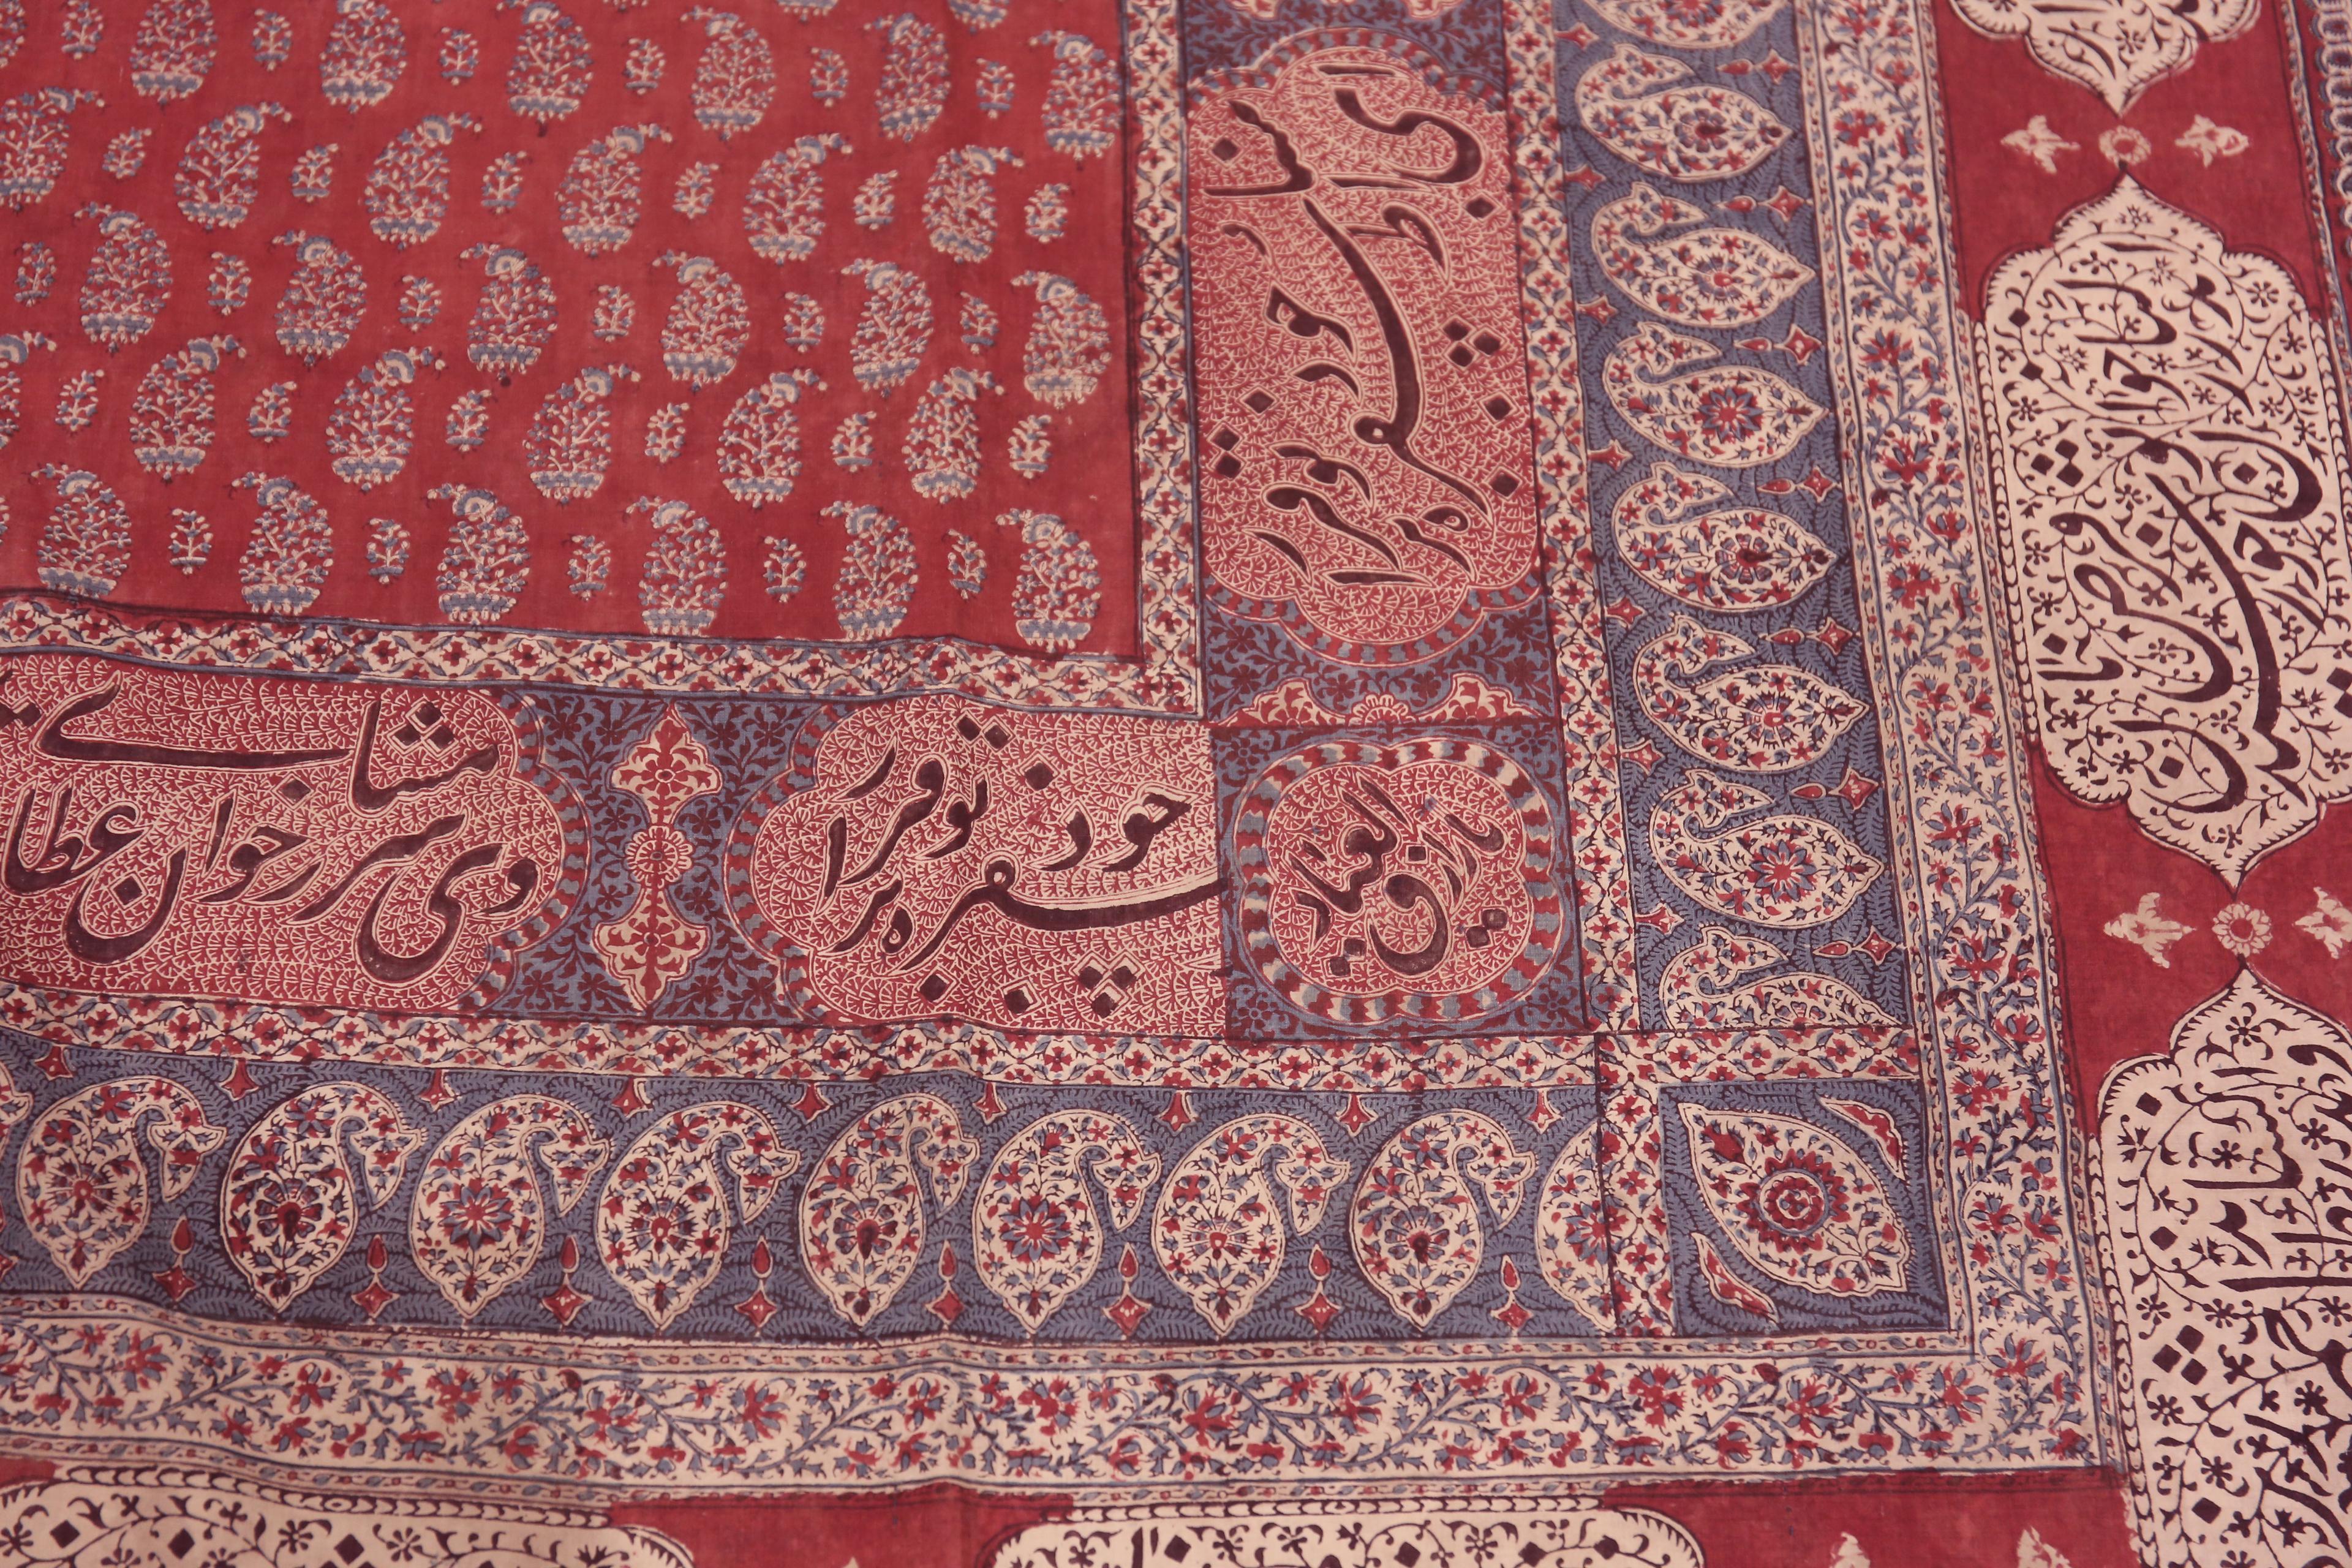 Hand-Painted Antique Persian Khorassan Paisley Kalamkari / Qalamkari Textile  6'3